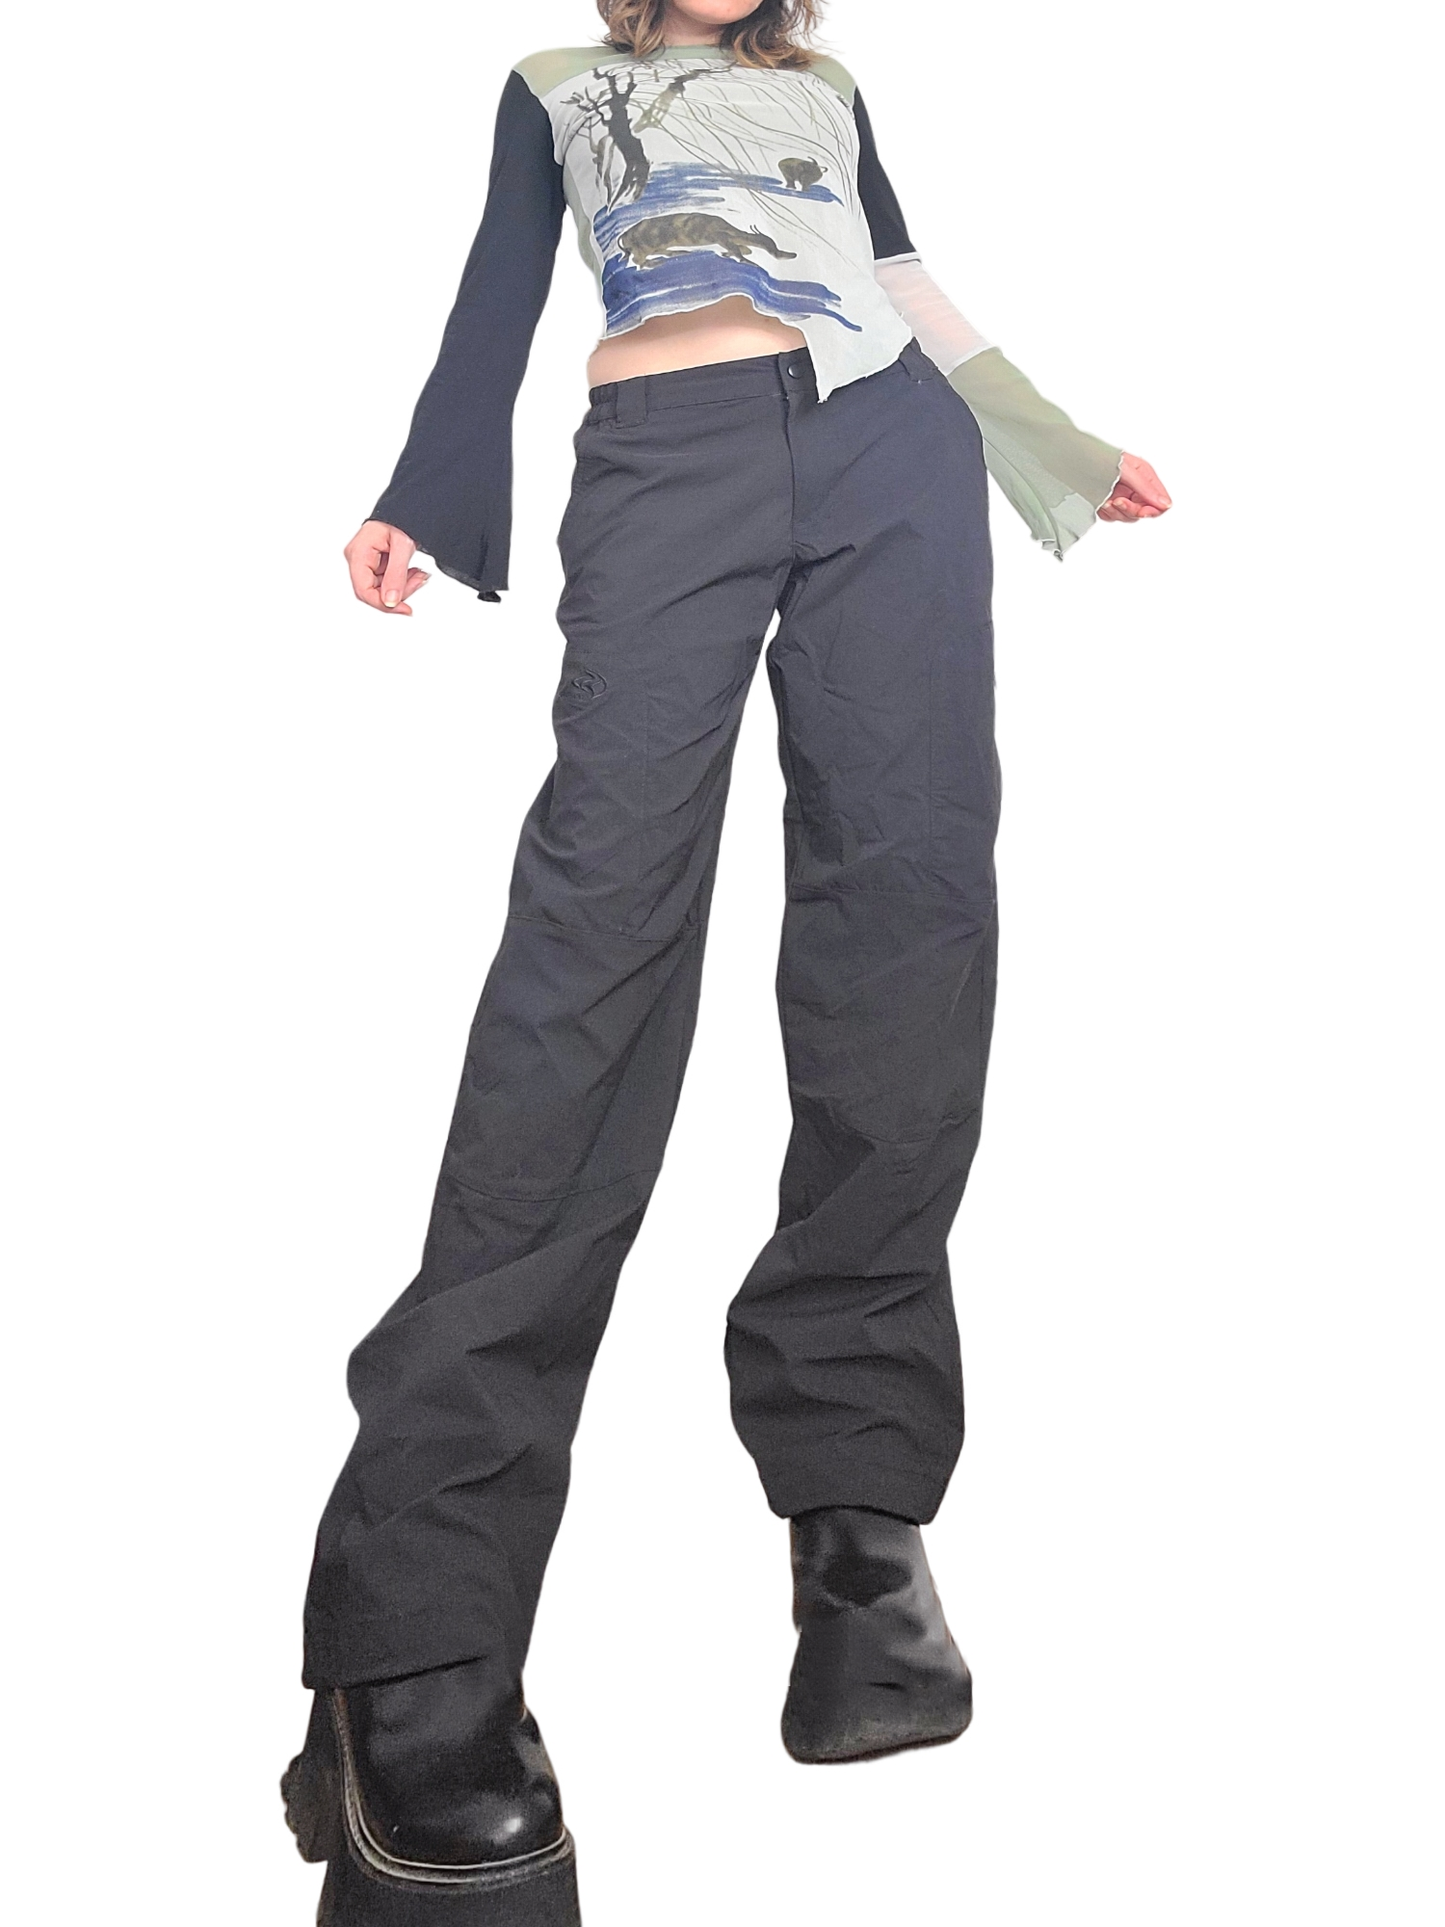 Neutal minimalist overpants gorpcore parachute cargo pants